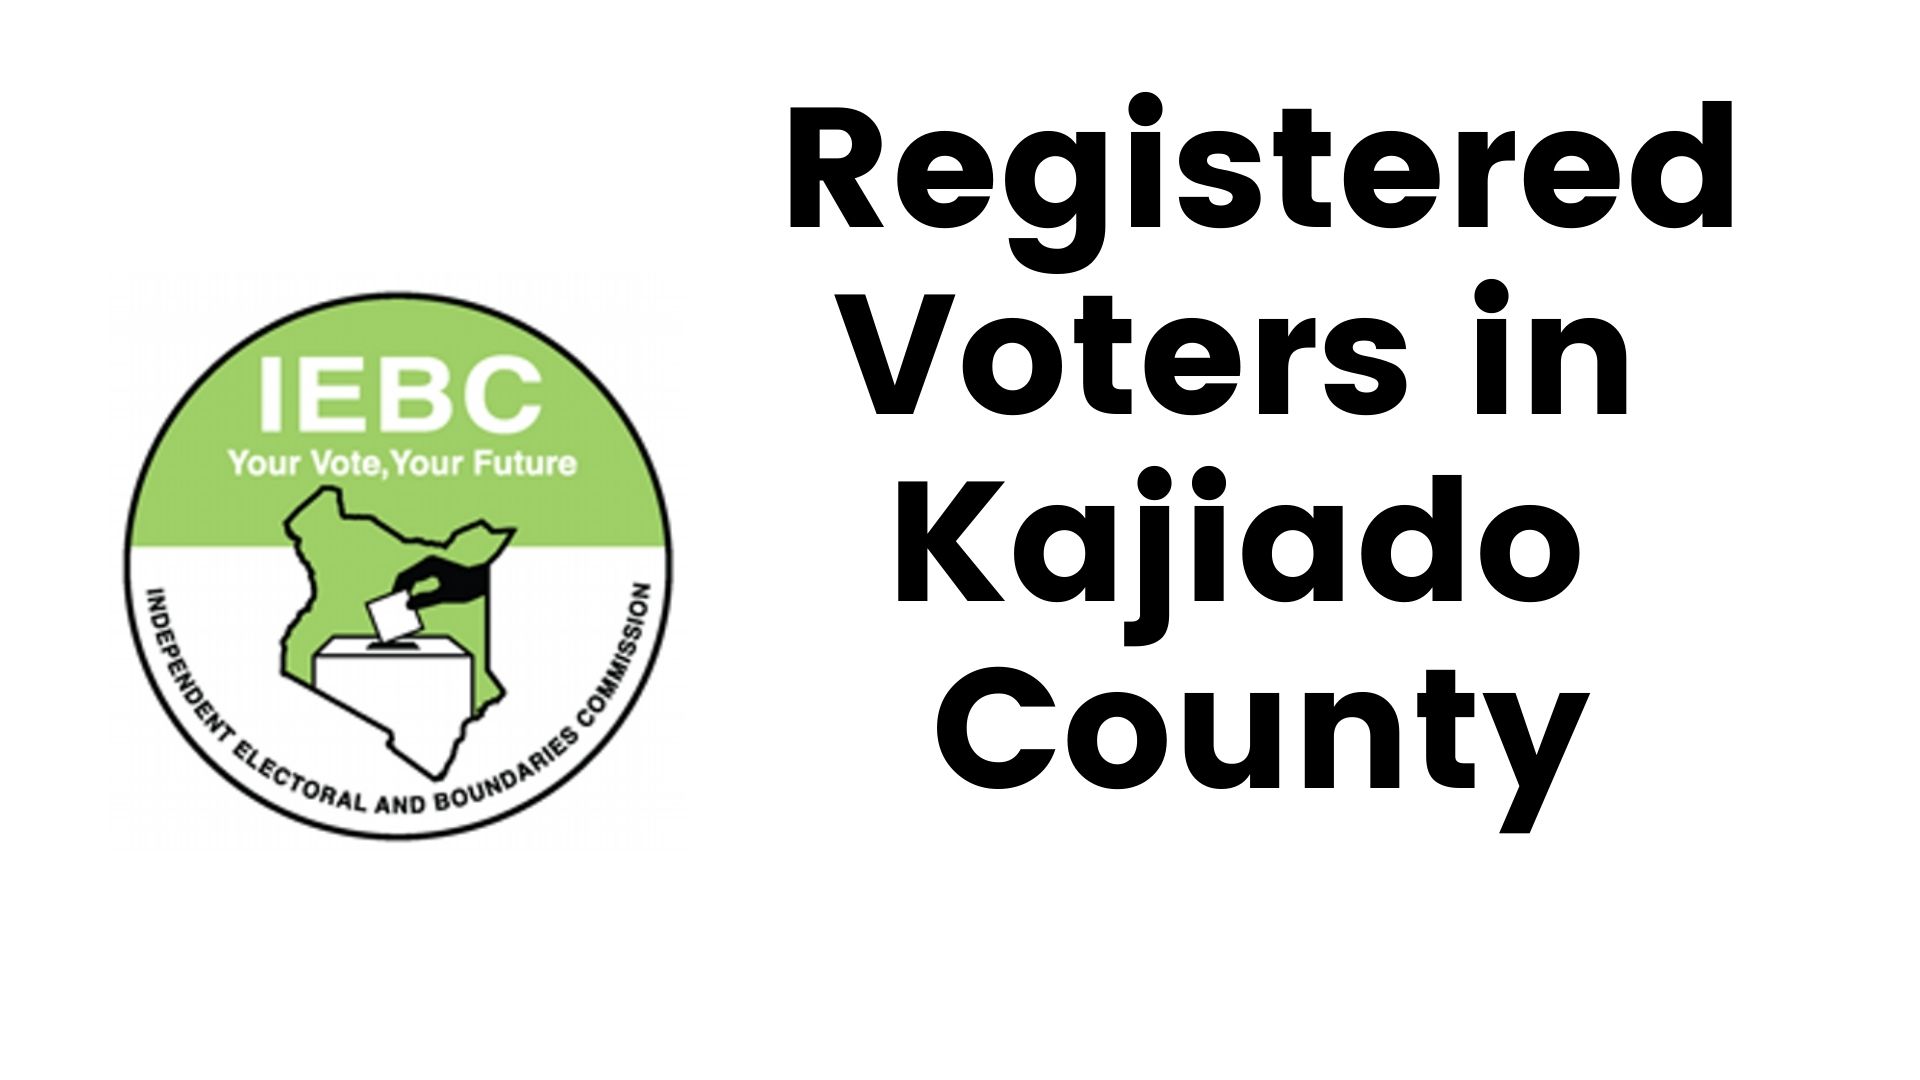 IEBC Kajiado County Registered Voters